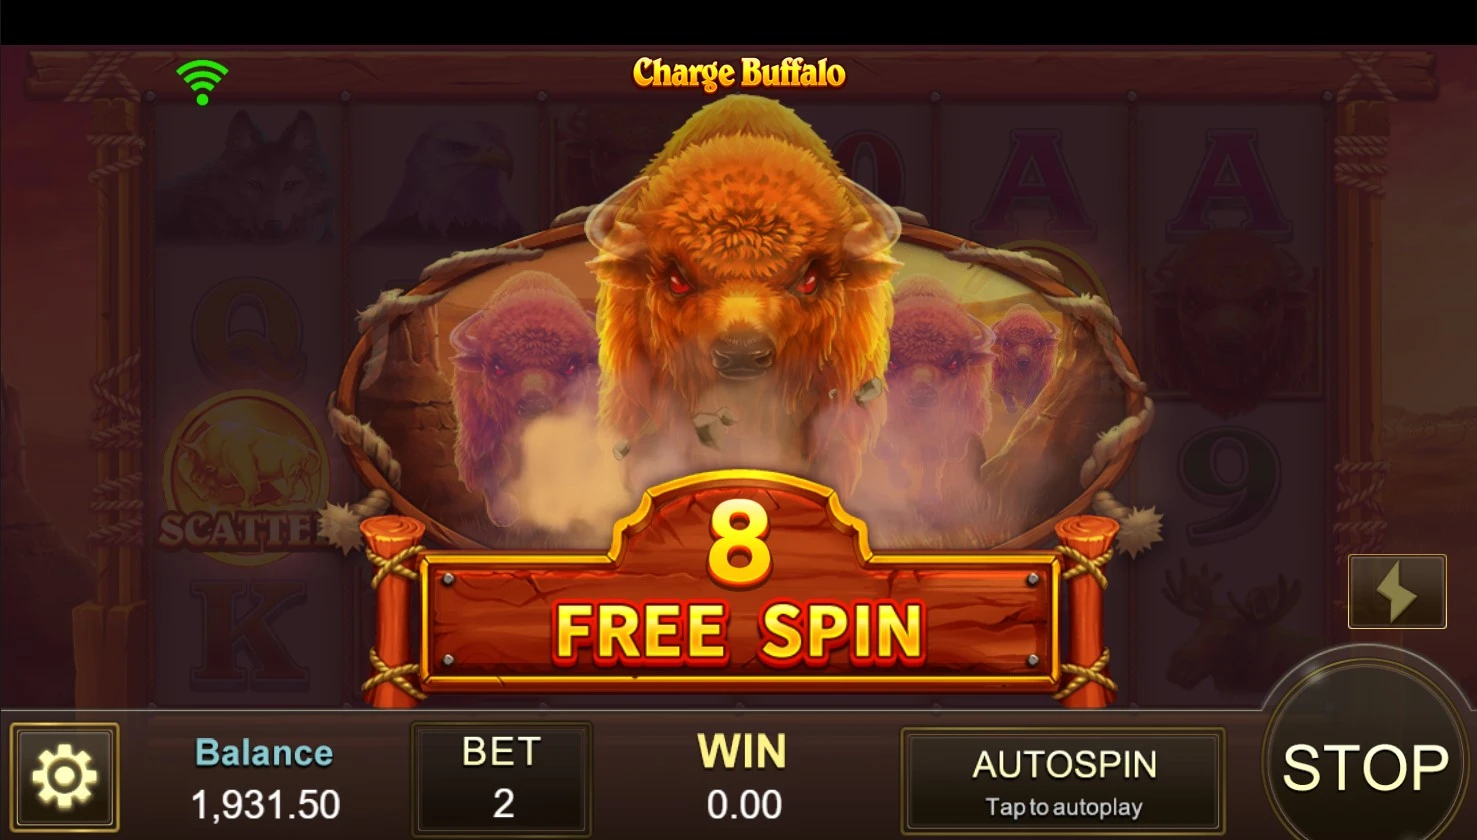 Charge Buffalo - 8 free spin | Jili Slot Games | Slot Machine Online